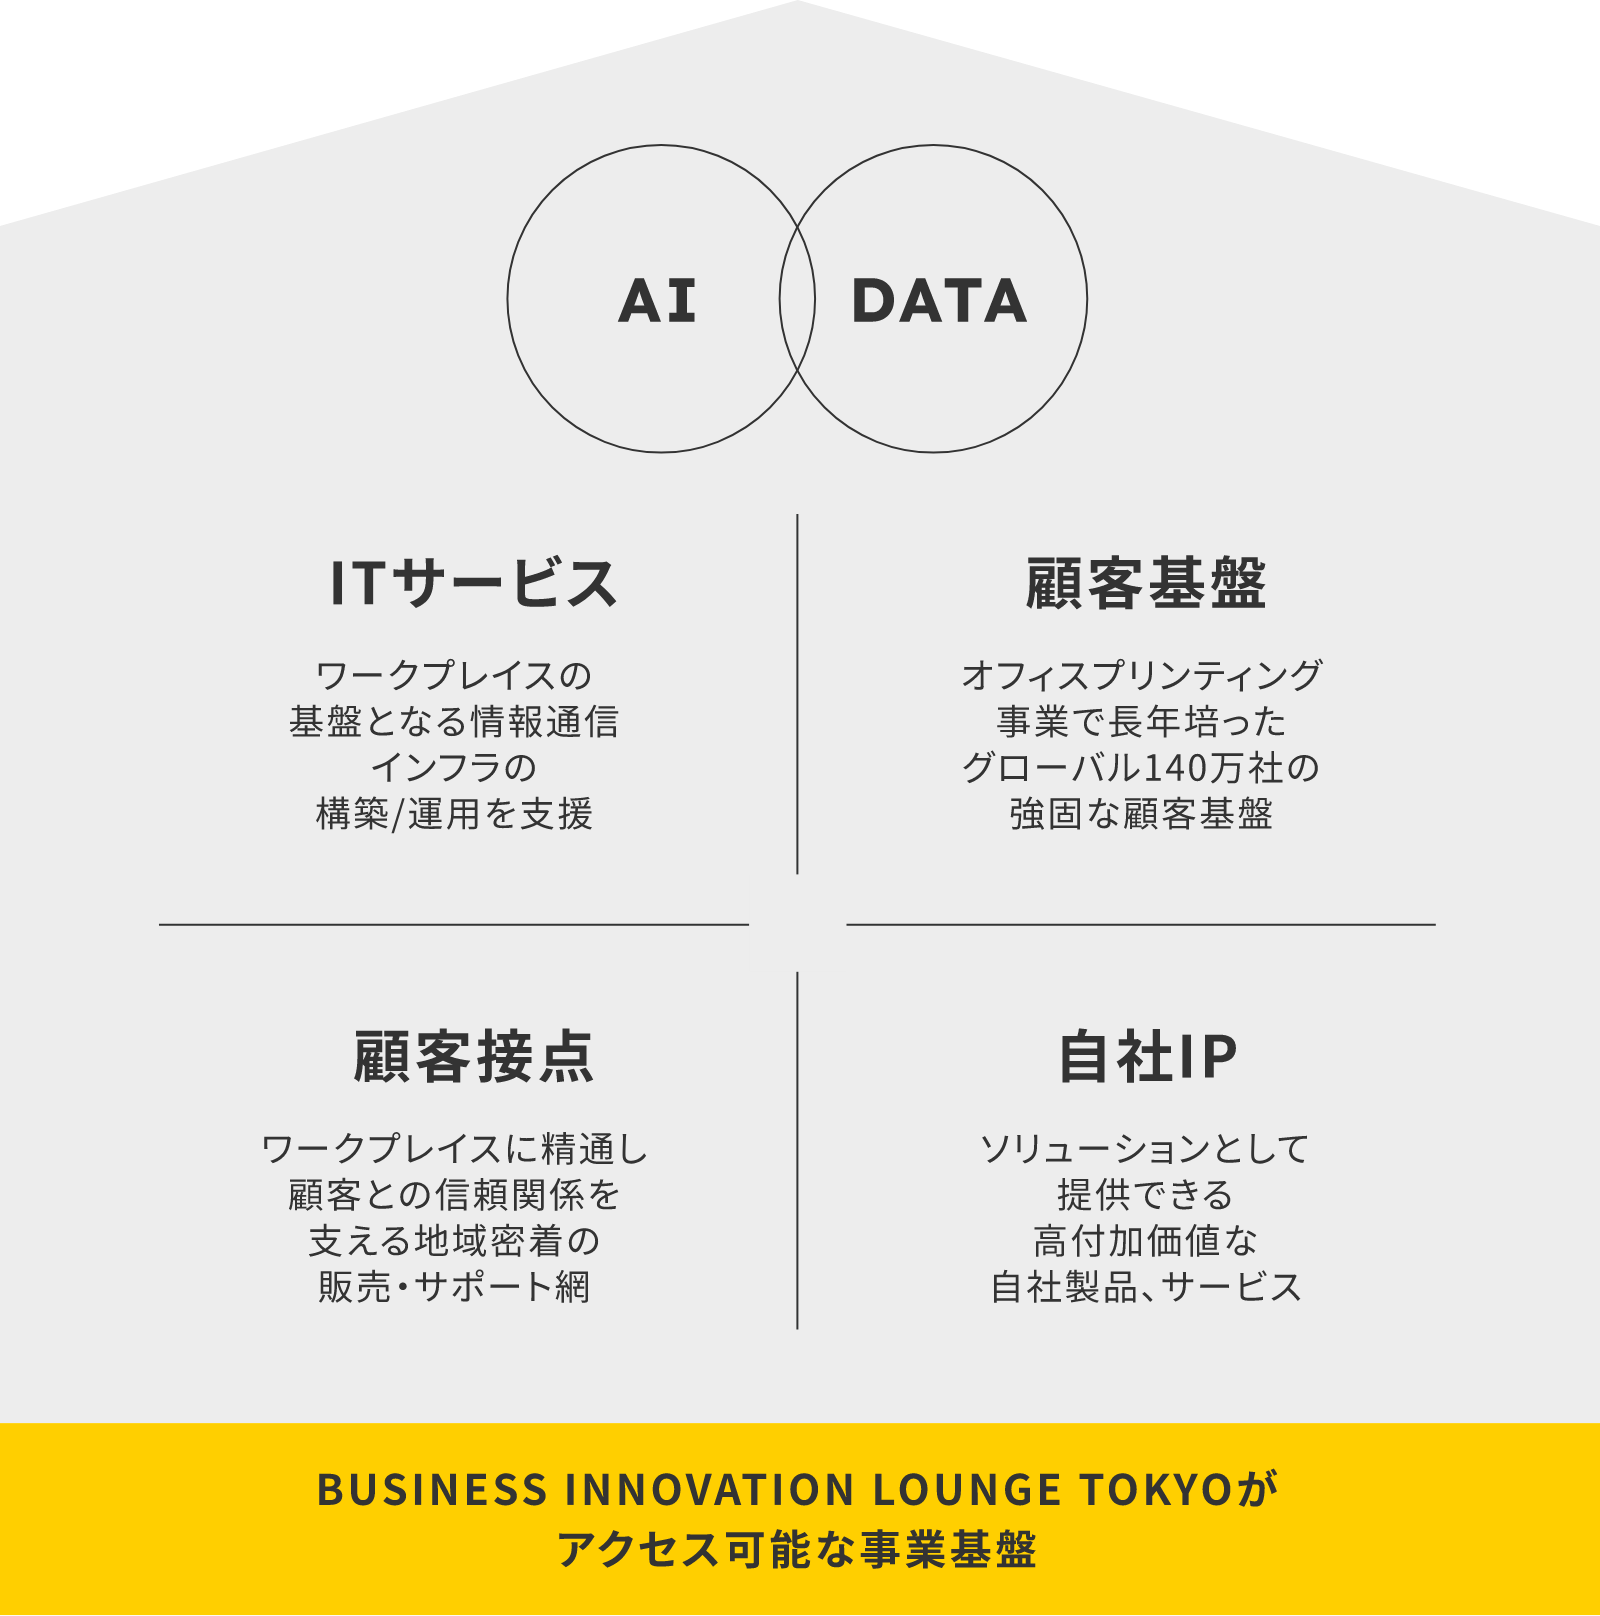 BISINESS INNOVATION LOUNGE TOKYOがアクセス可能な事業基盤があります。AI DATA。ITサービス。ワークプレイスの基盤となる情報通信インフラの構築/運用を支援。顧客基盤。オフィスプリンティング事業で長年培ったグローバル140万社の強固な顧客基盤。顧客接点。ワークプレイスに精通し顧客との信頼関係を支える地域密着の販売・サポート網。自社IP。ソリューションとして提供できる高付加価値な自社製品、サービス。